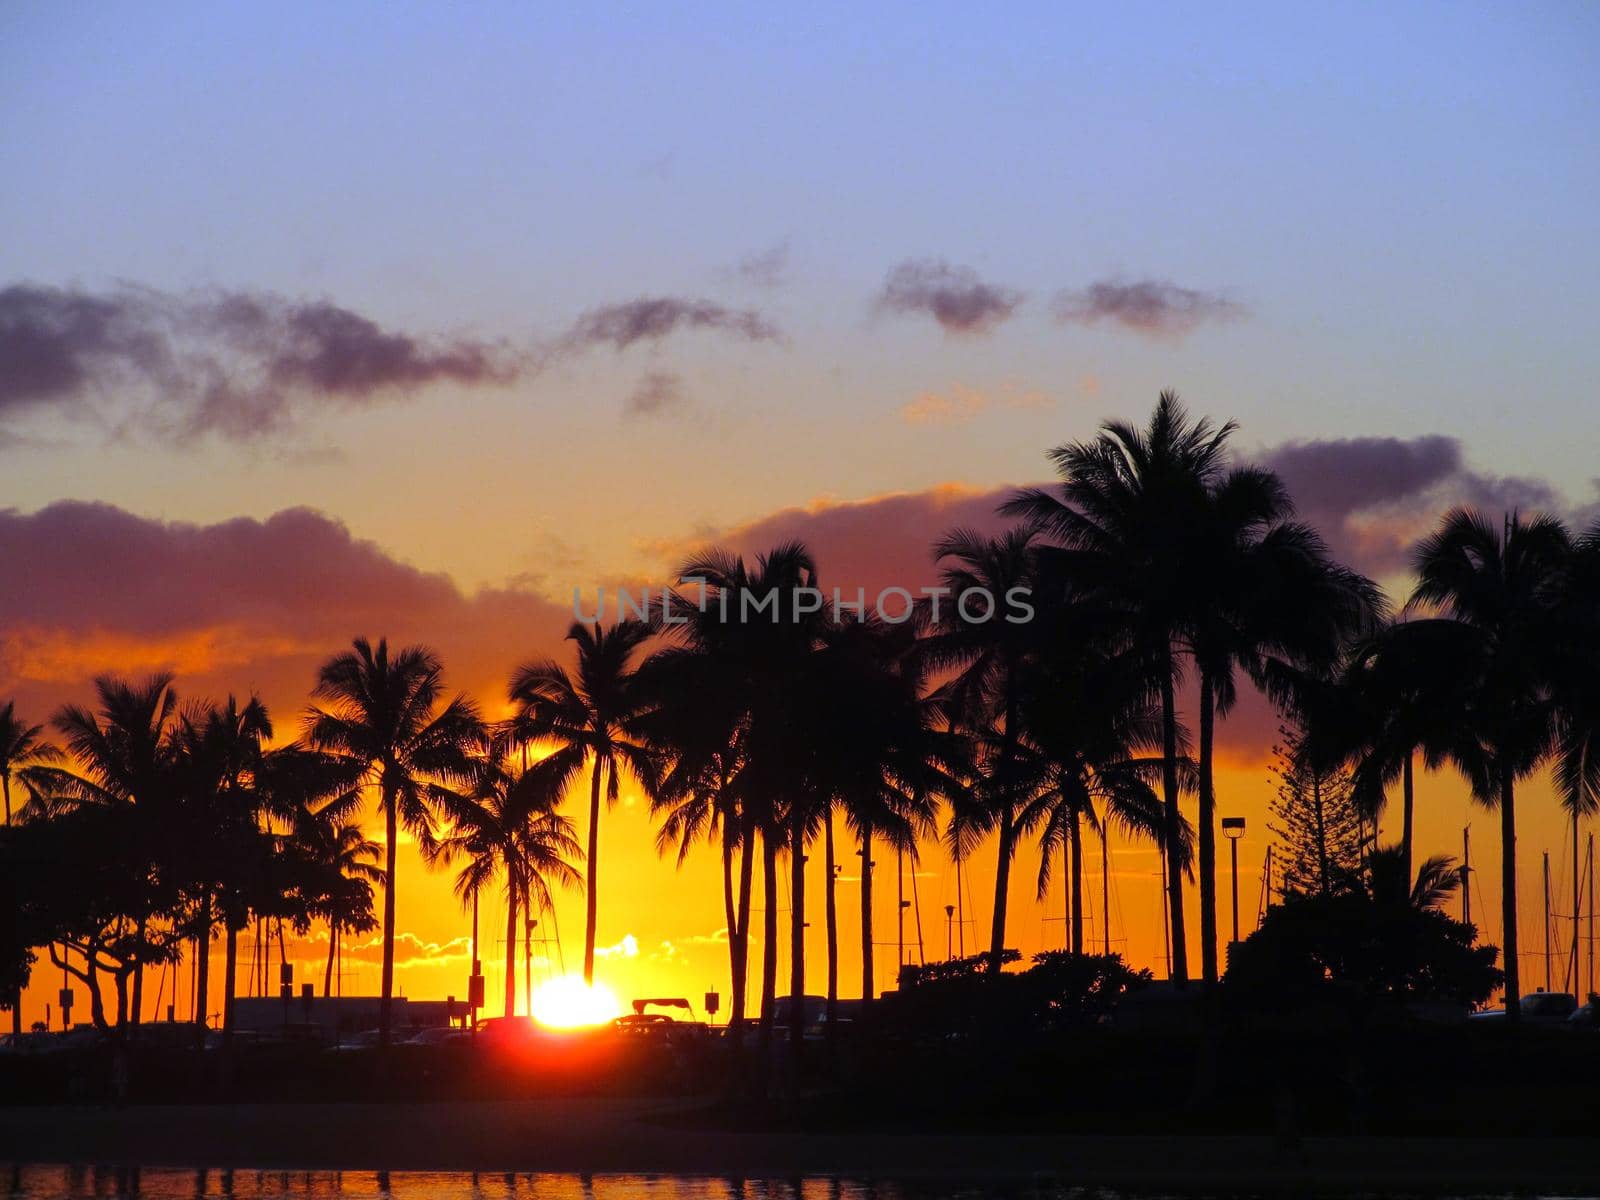 Sunsets through Coconut trees over with light reflecting on lagoon and illuminating the sky orange on Waikiki Beach on Oahu, Hawaii. February 6, 2013.
